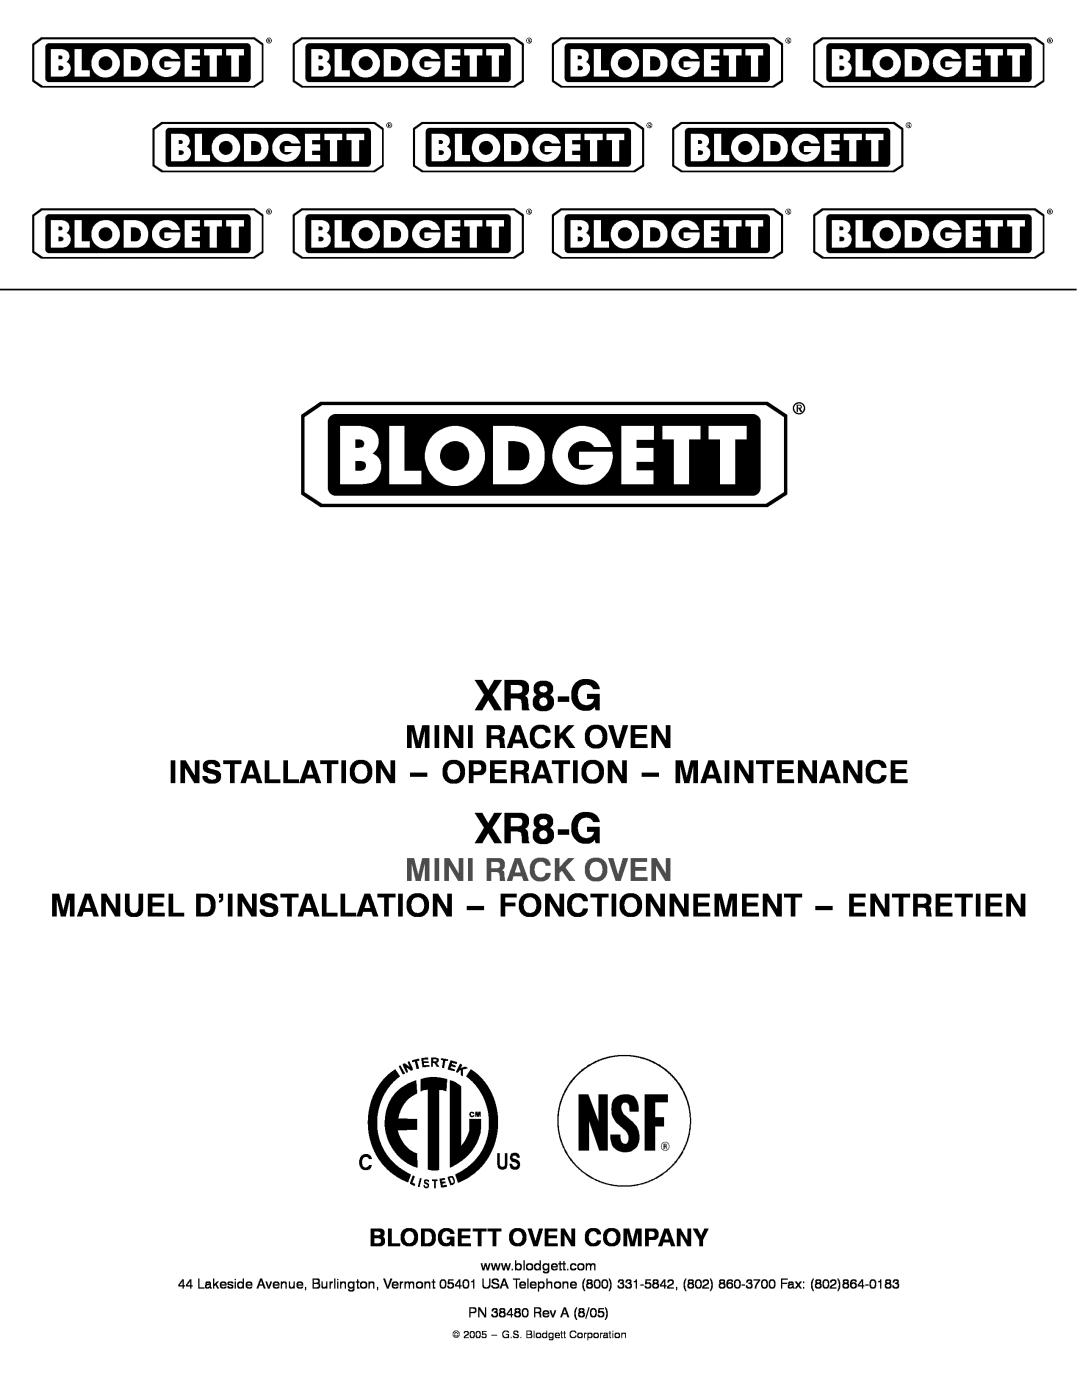 Blodgett XR8-G manual Mini Rack Oven Installation -- Operation -- Maintenance, Blodgett Oven Company 